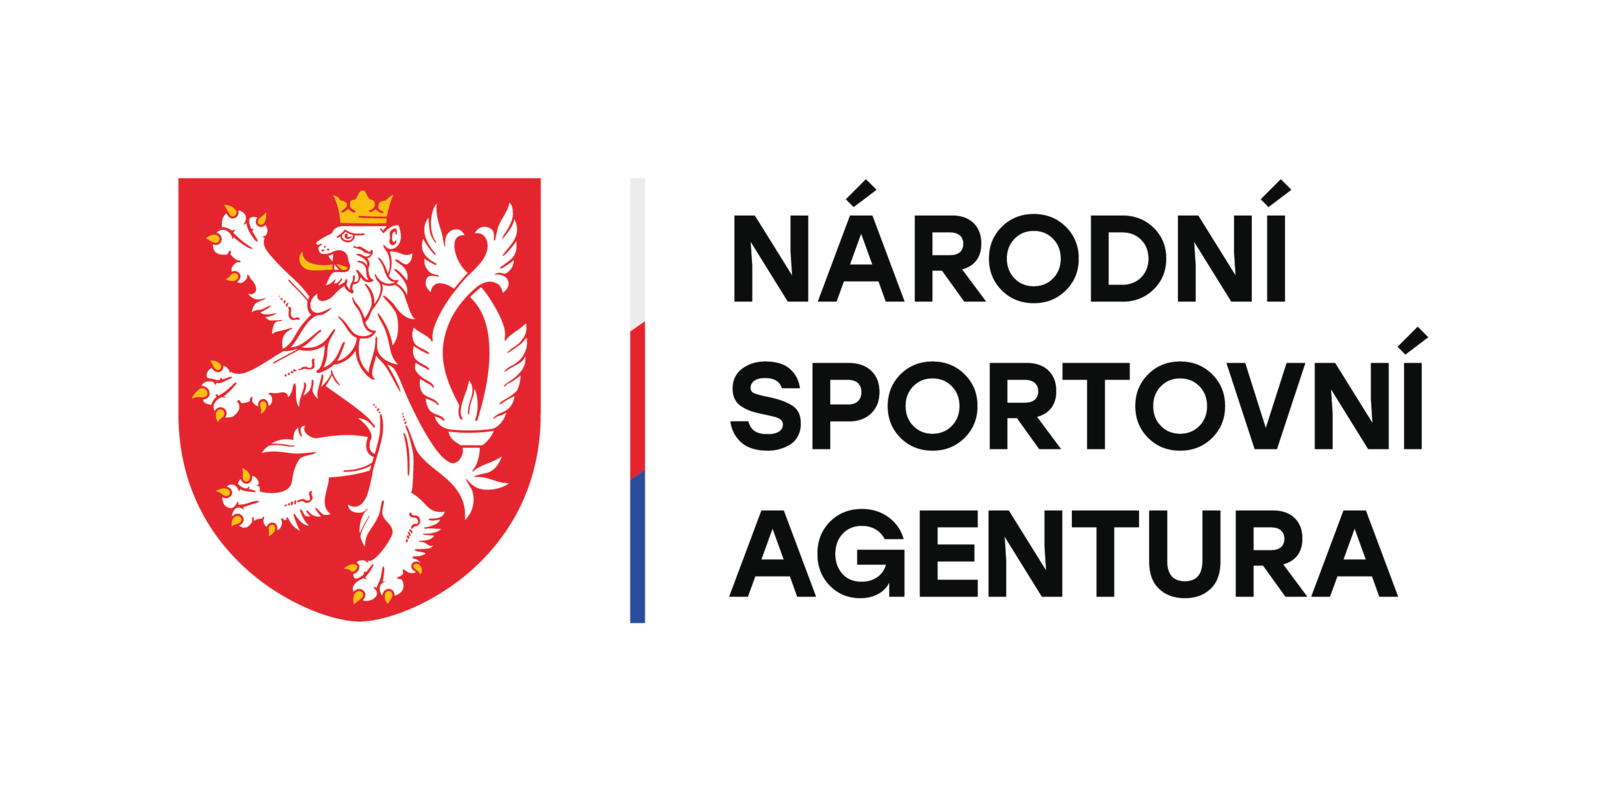 Narodni sportovni agentura_logo cmyk.png